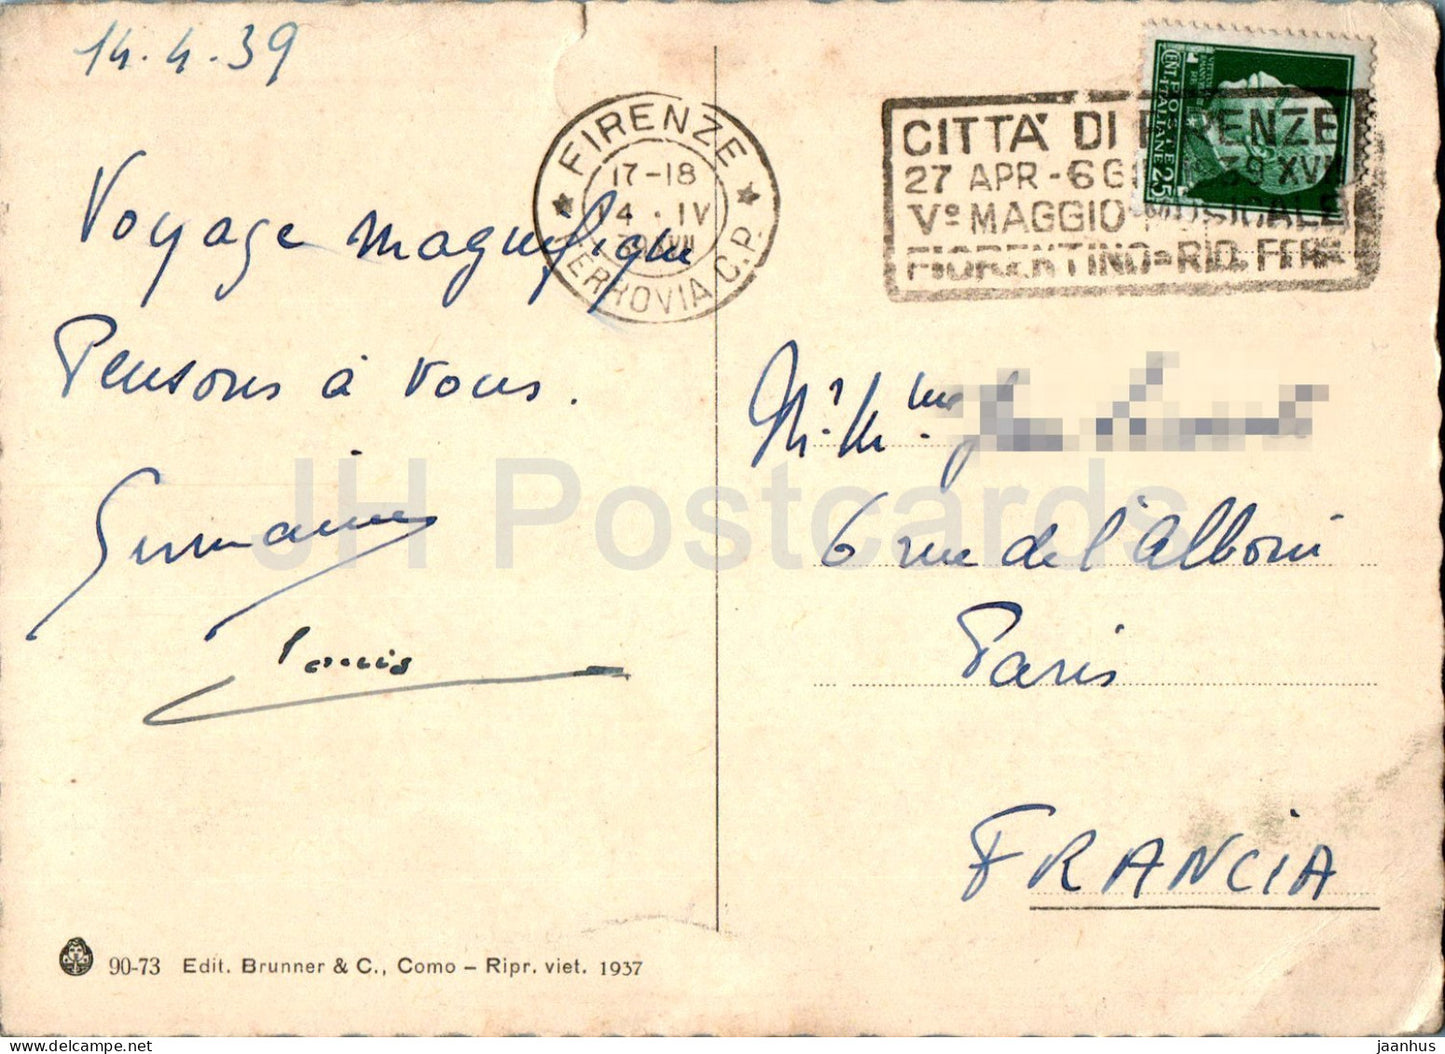 Firenze - Florence - L'Arno e veduta dei Ponti - river - bridge - 90-73 - old postcard - 1939 - Italy - used